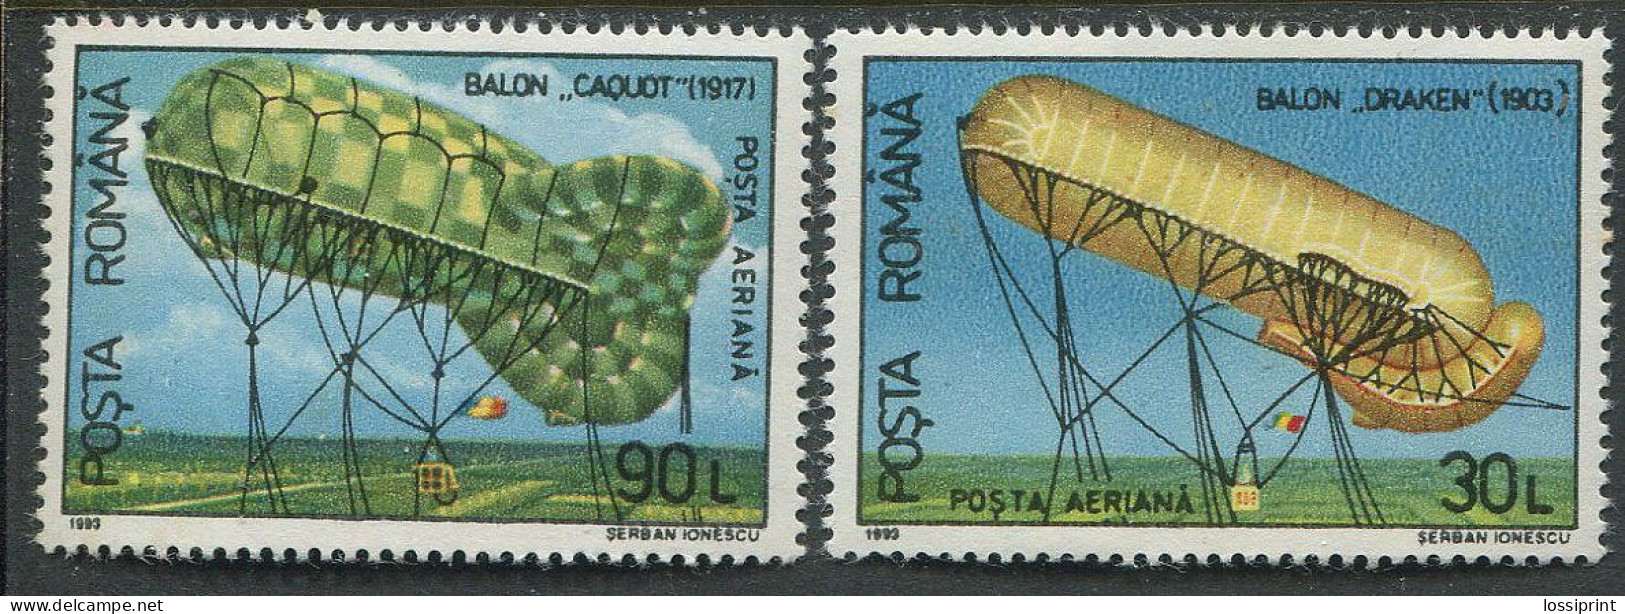 Romania:Unused Stamps Balloons, 1993, MNH - Zeppelines